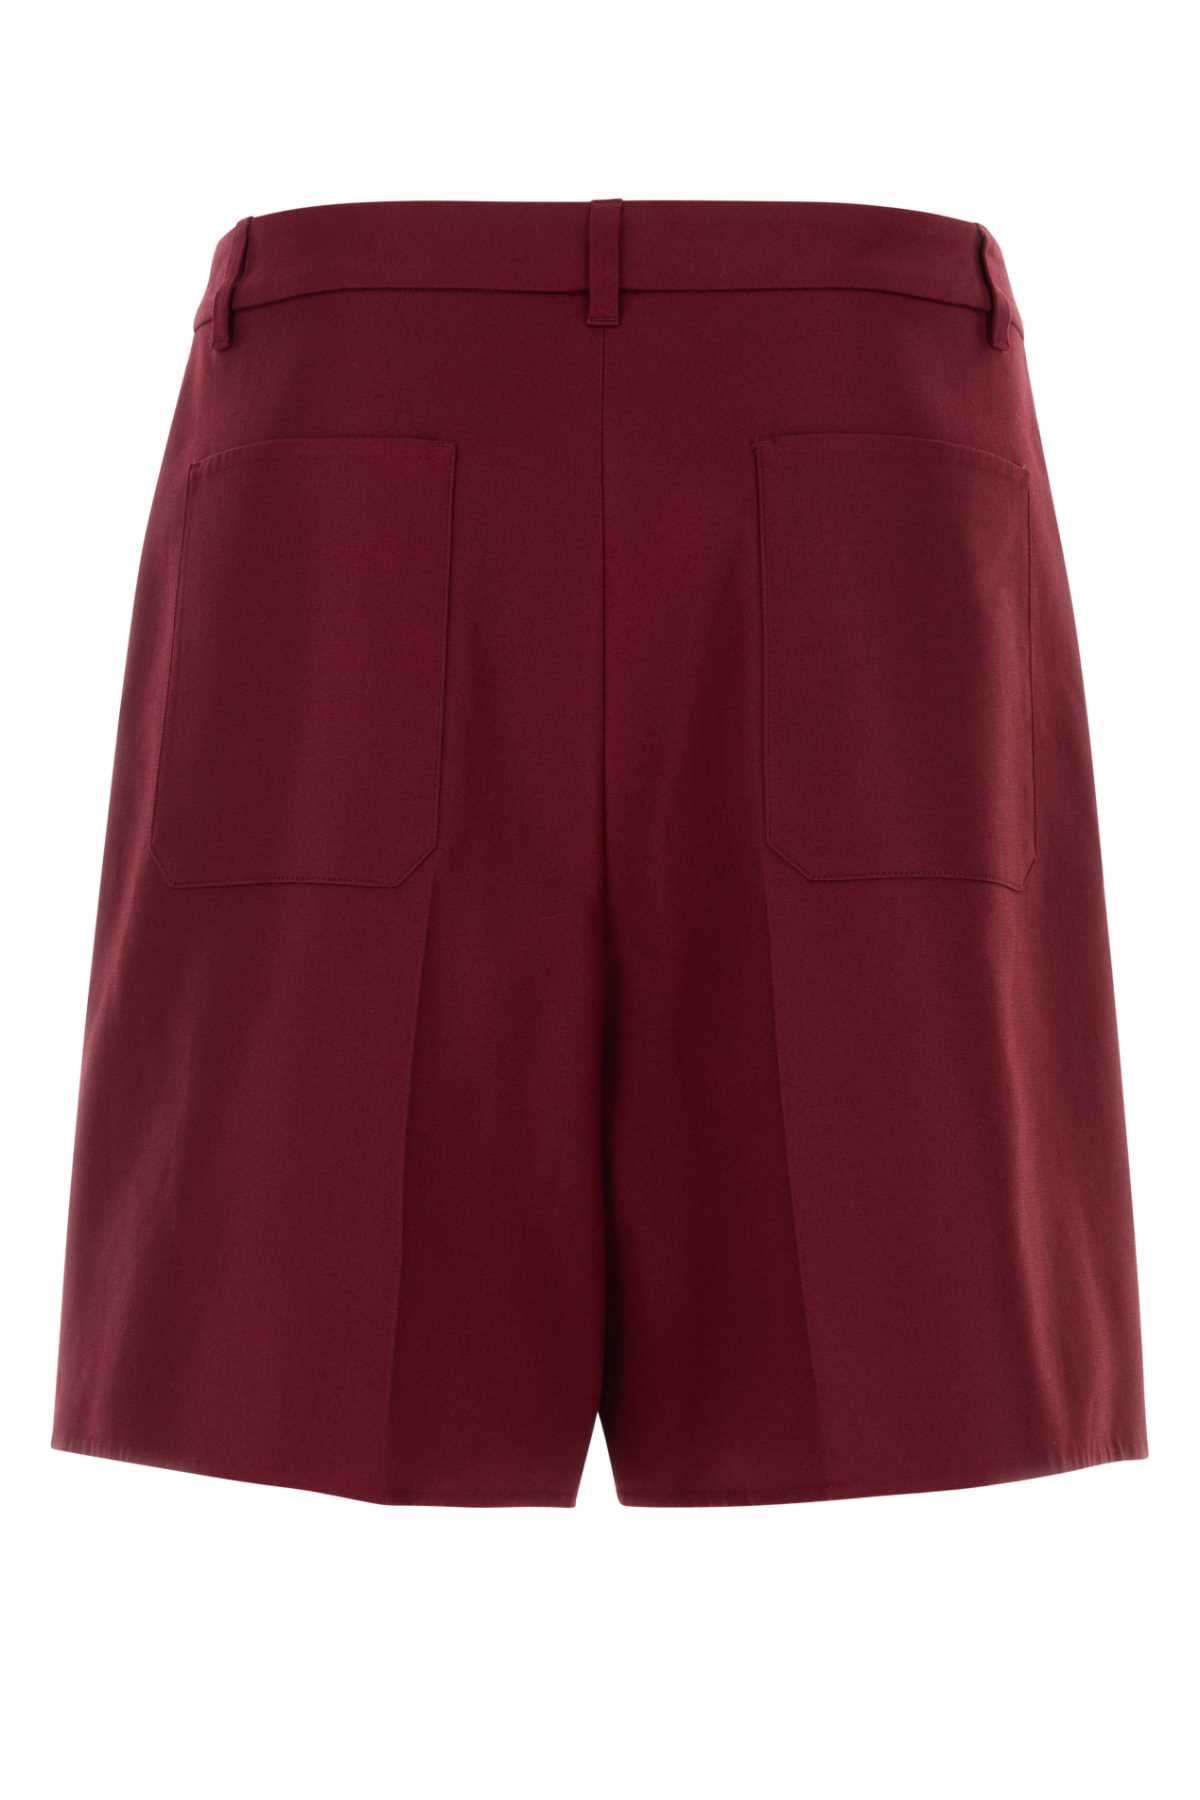 Valentino Burgundy Cotton Bermuda Shorts In Rubin